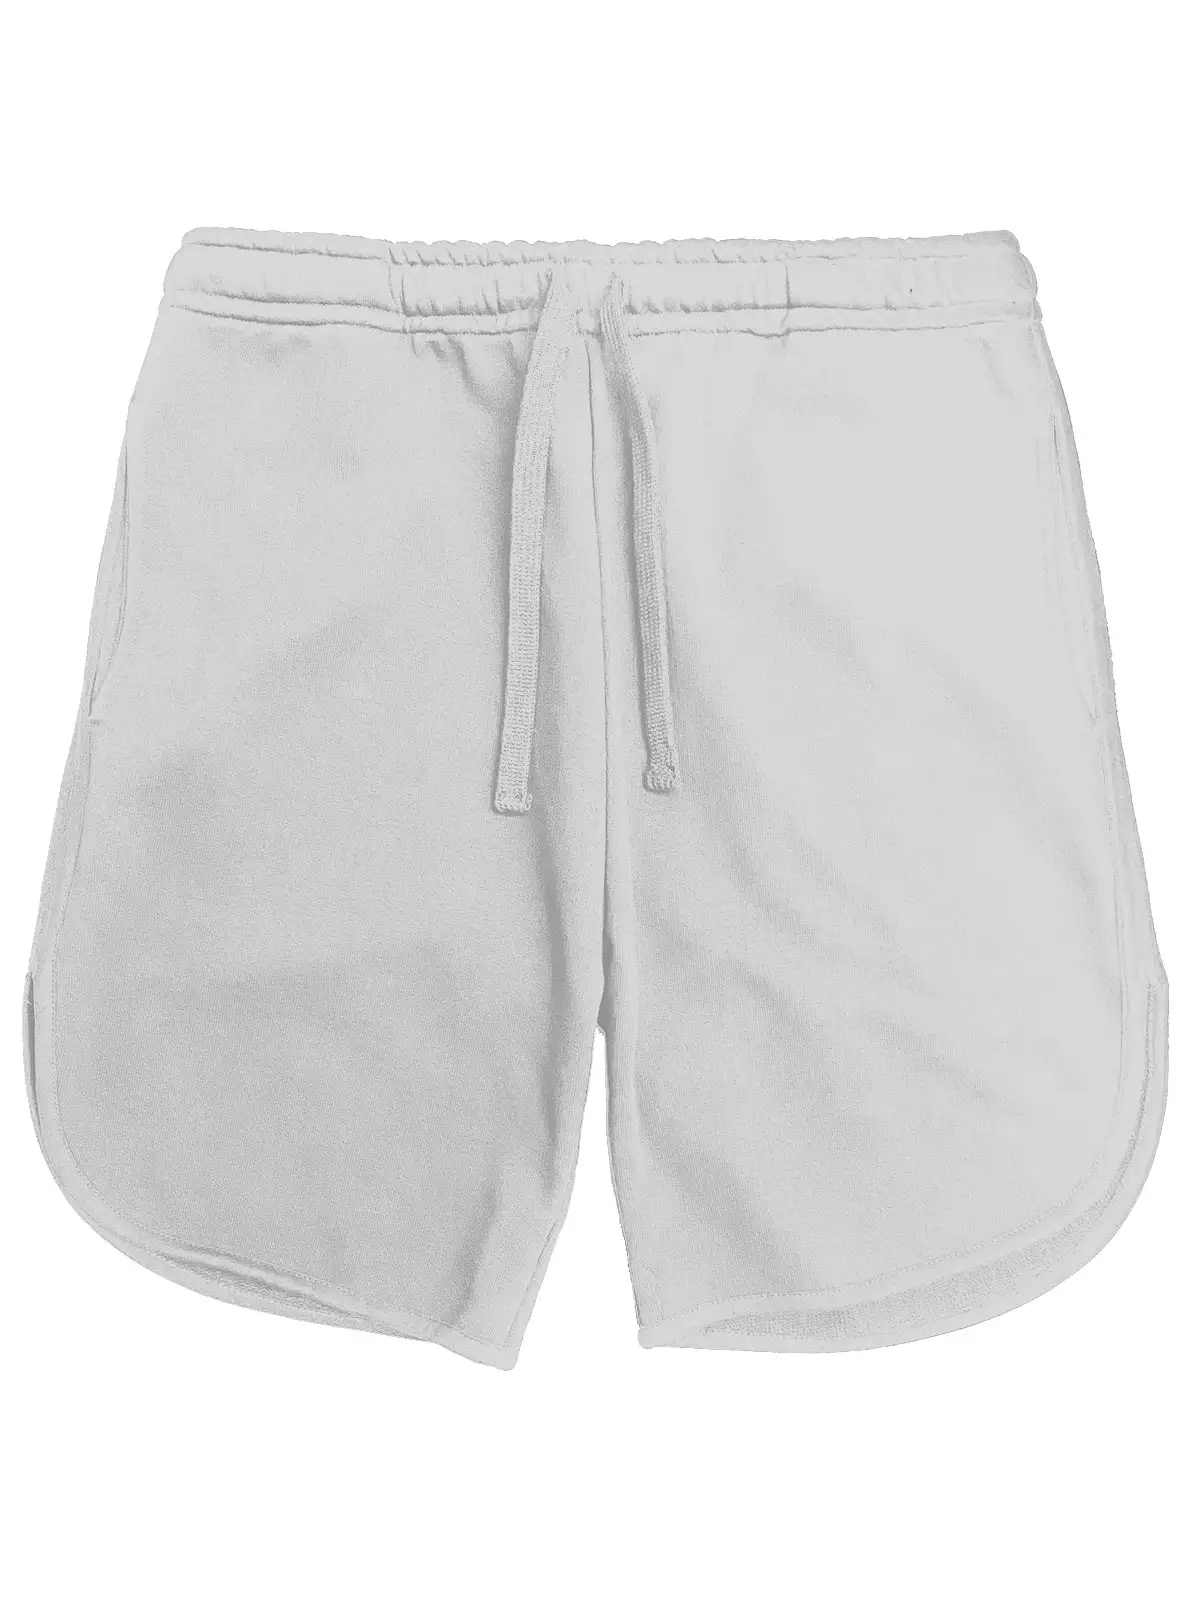 Genderless terry shorts